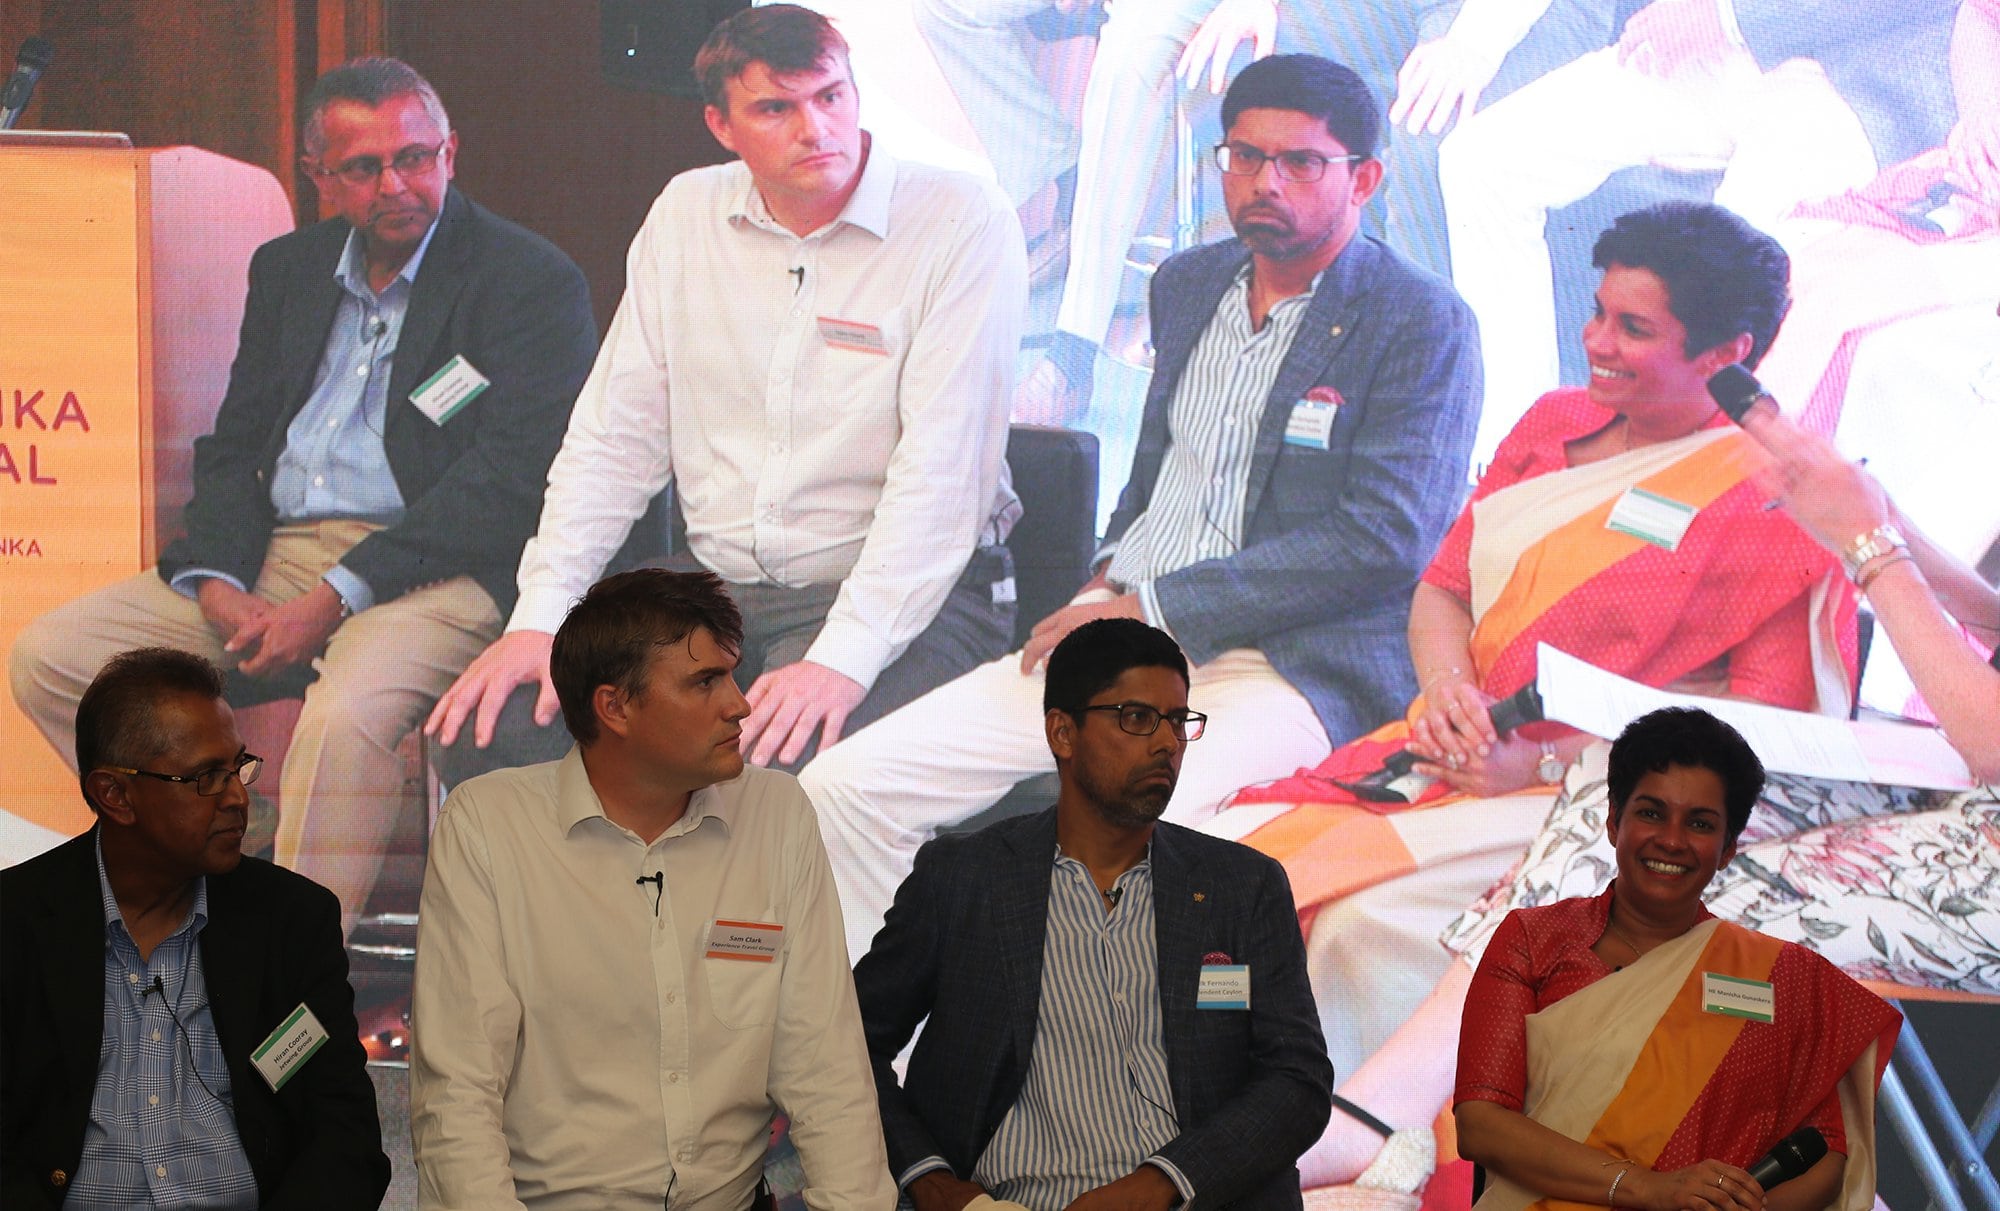 Panel discussion at Sri Lanka revival event